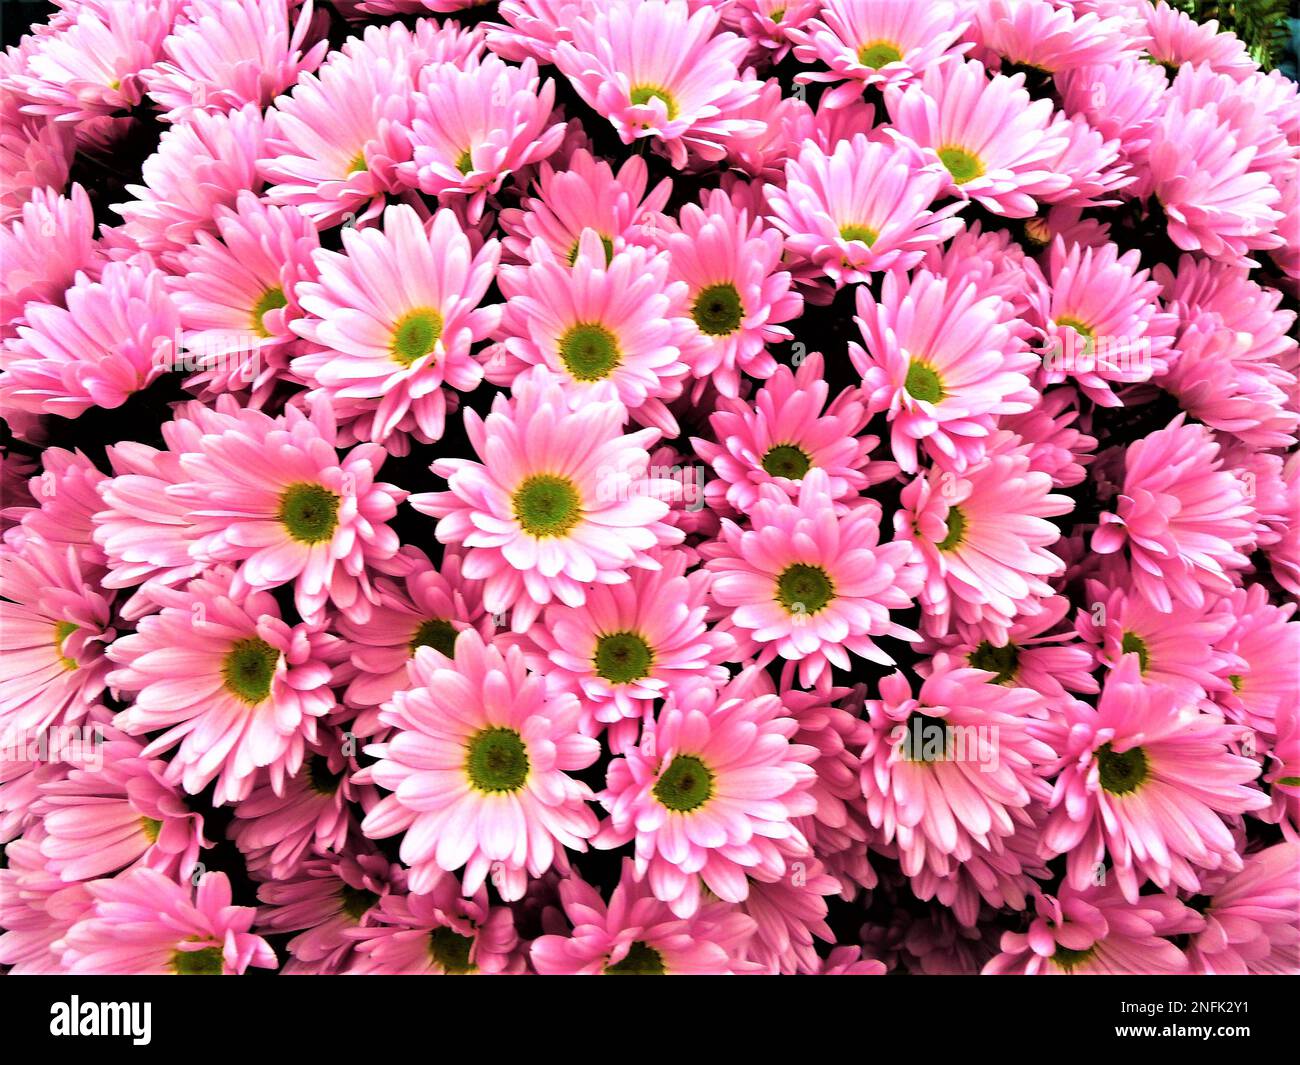 flowering plants of the genus Chrysanthemum at BBC gardens, Birmingham, UK Stock Photo